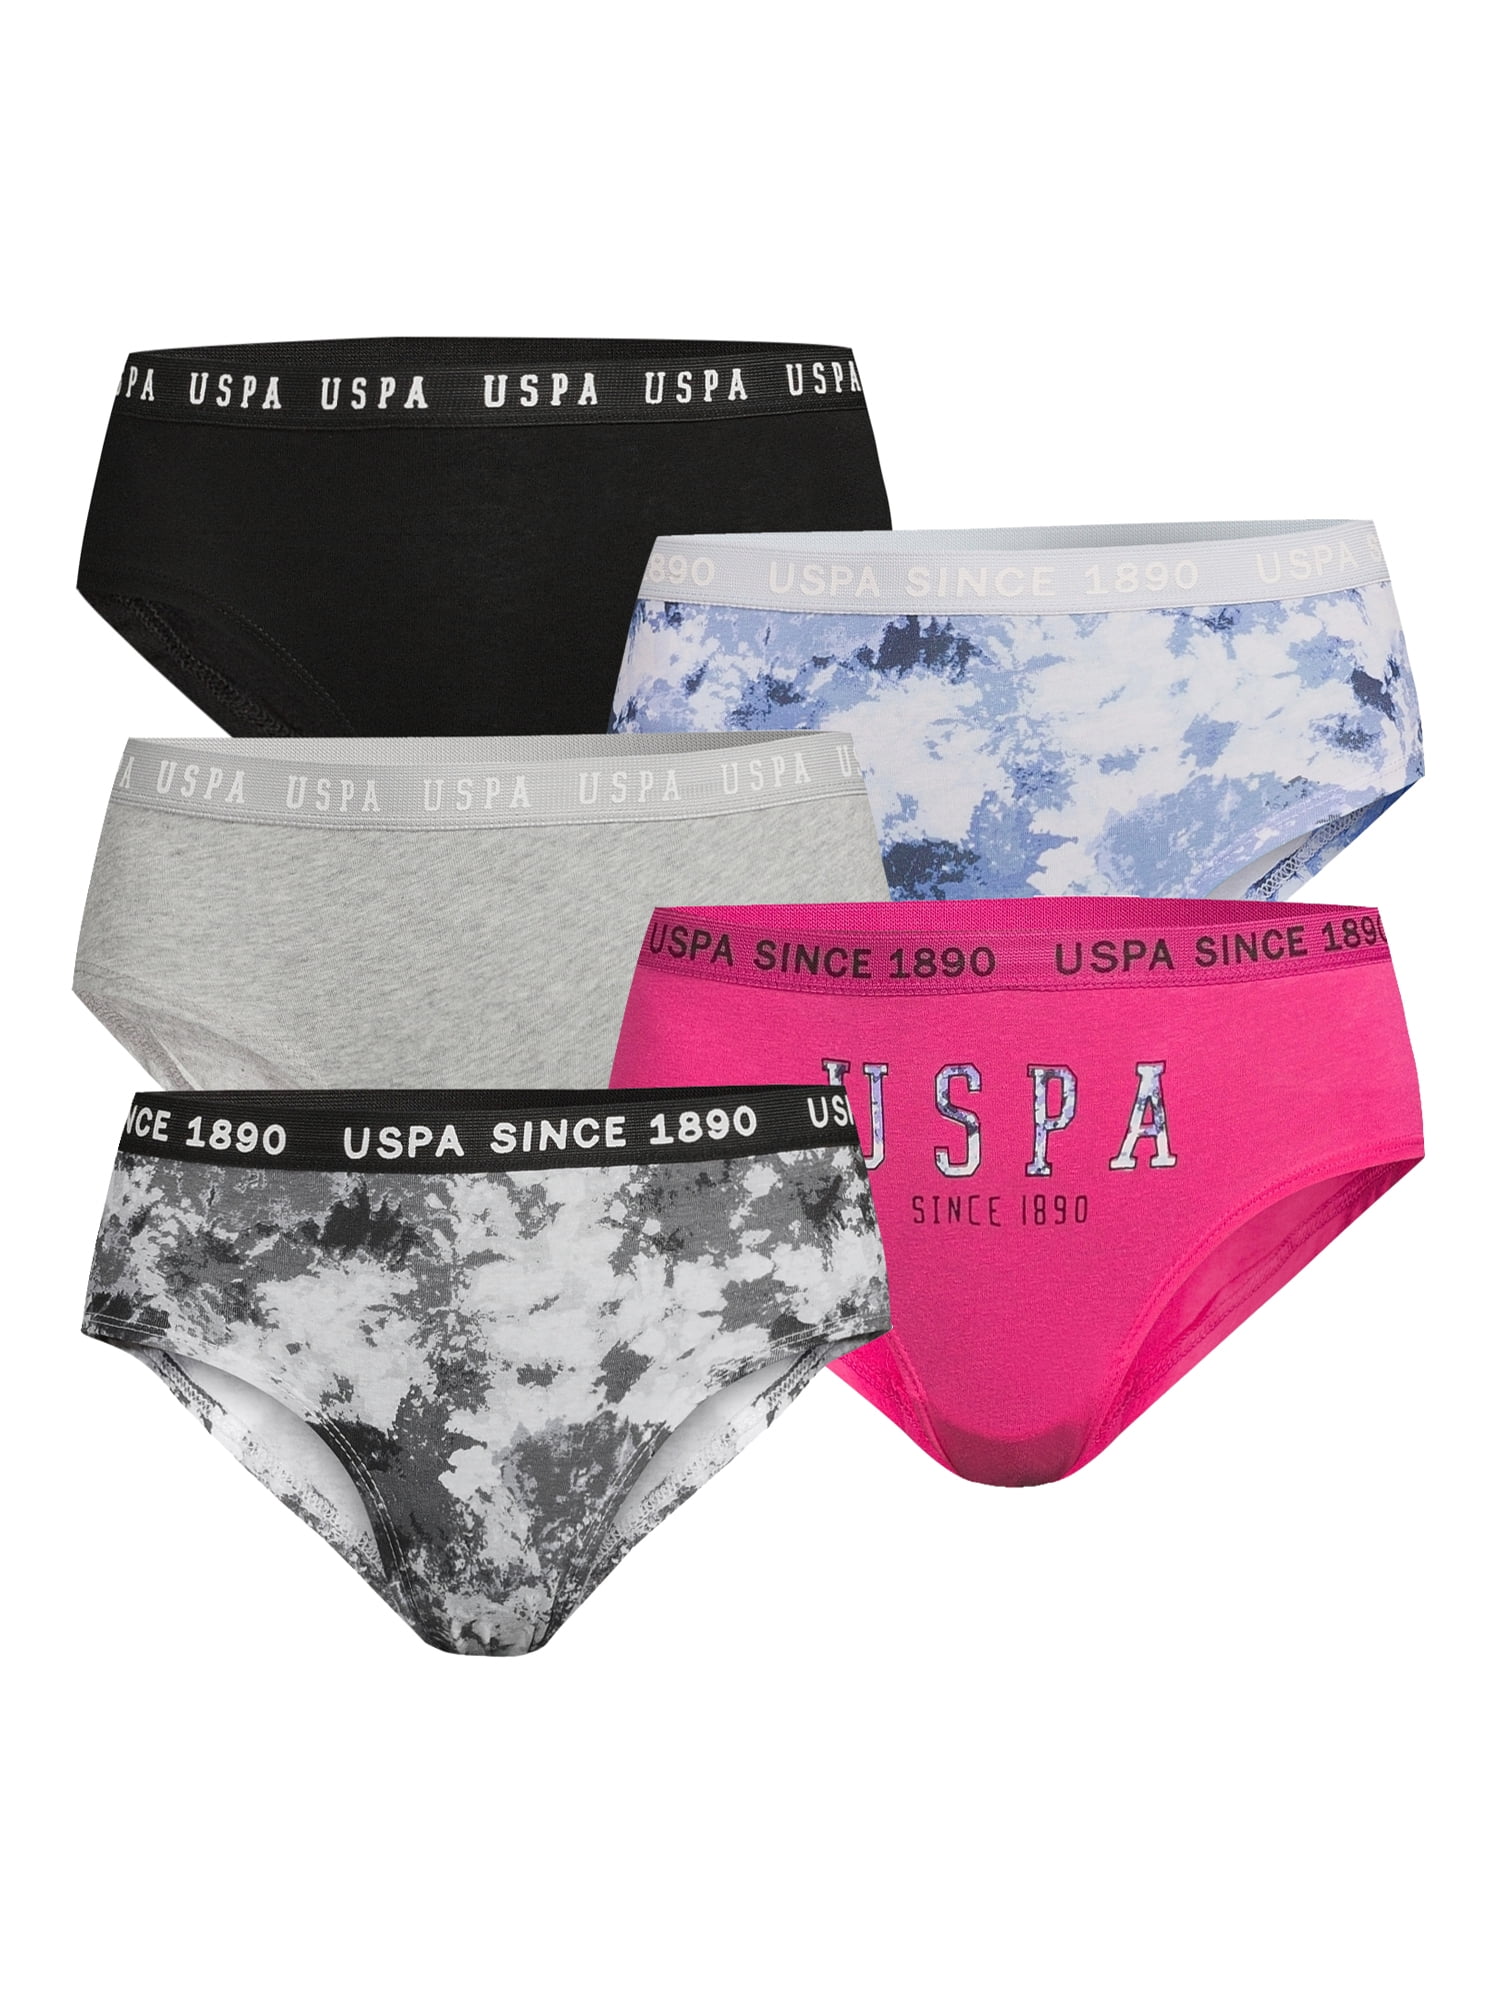 Ursus Copia Underpants Underwear New 5Pcs Women Underwear Set Plus